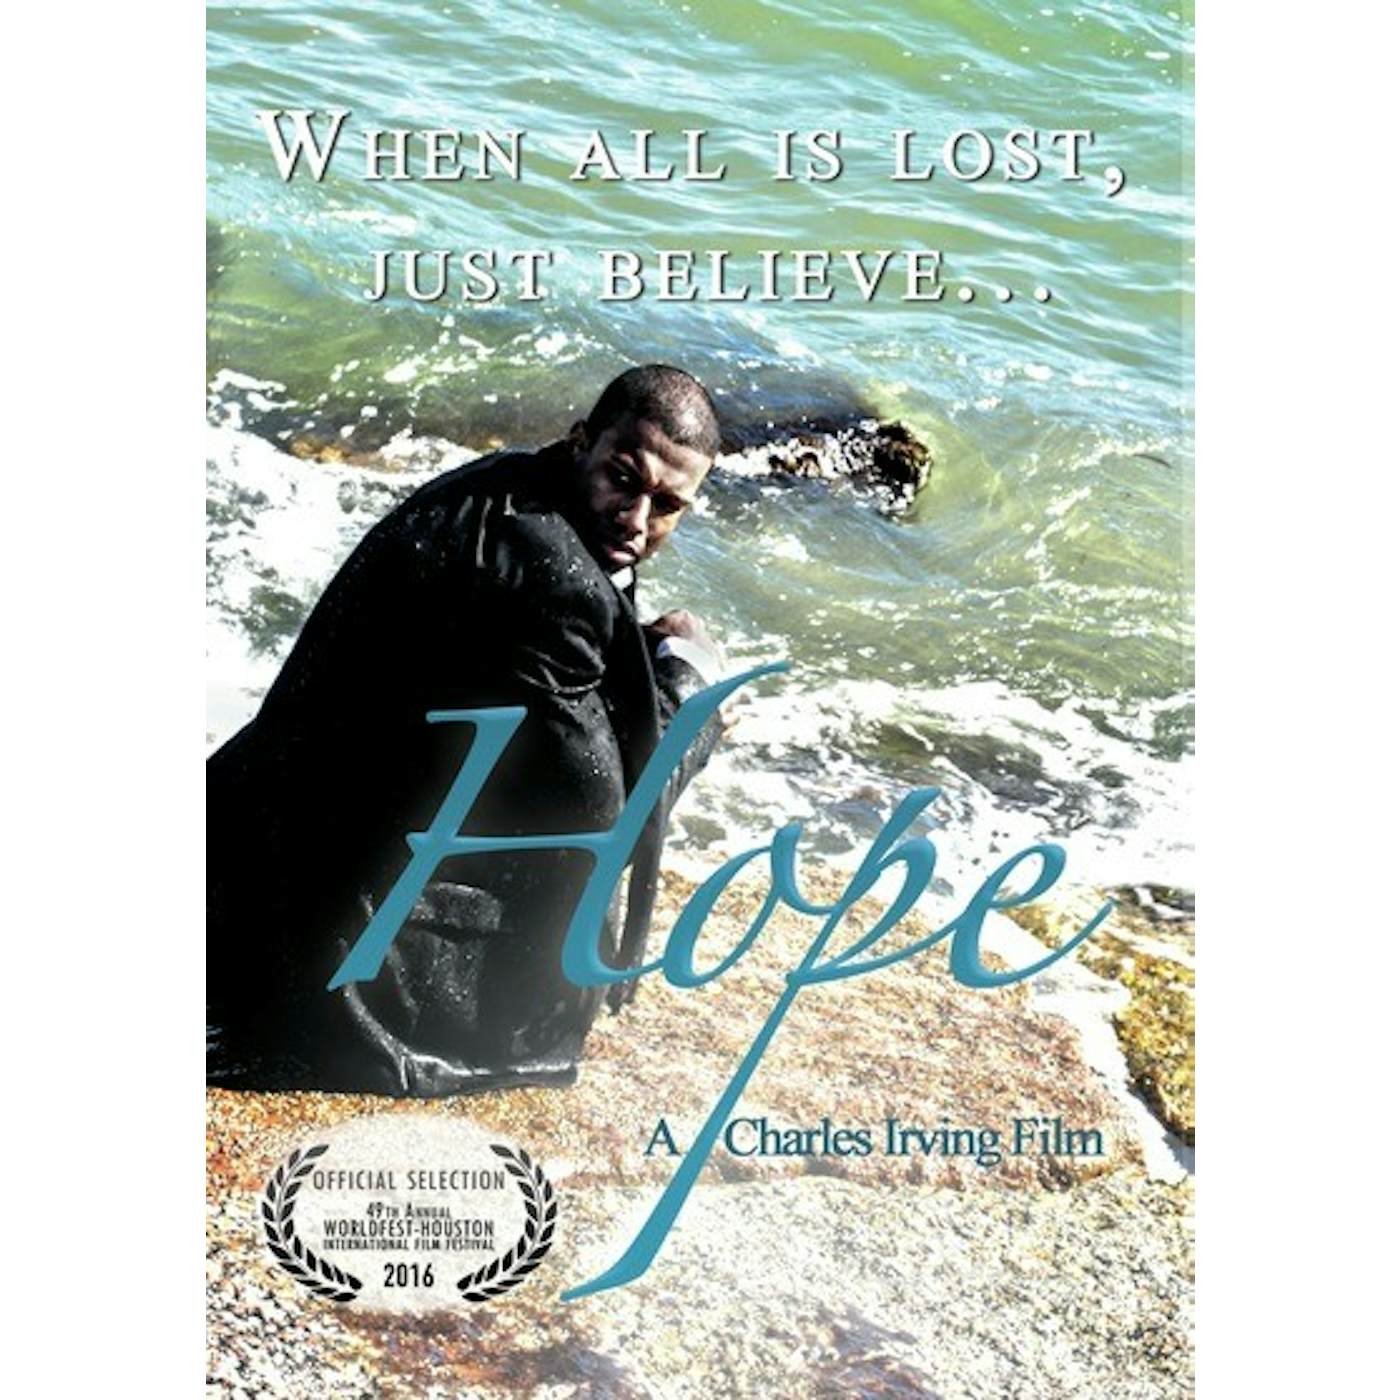 HOPE DVD